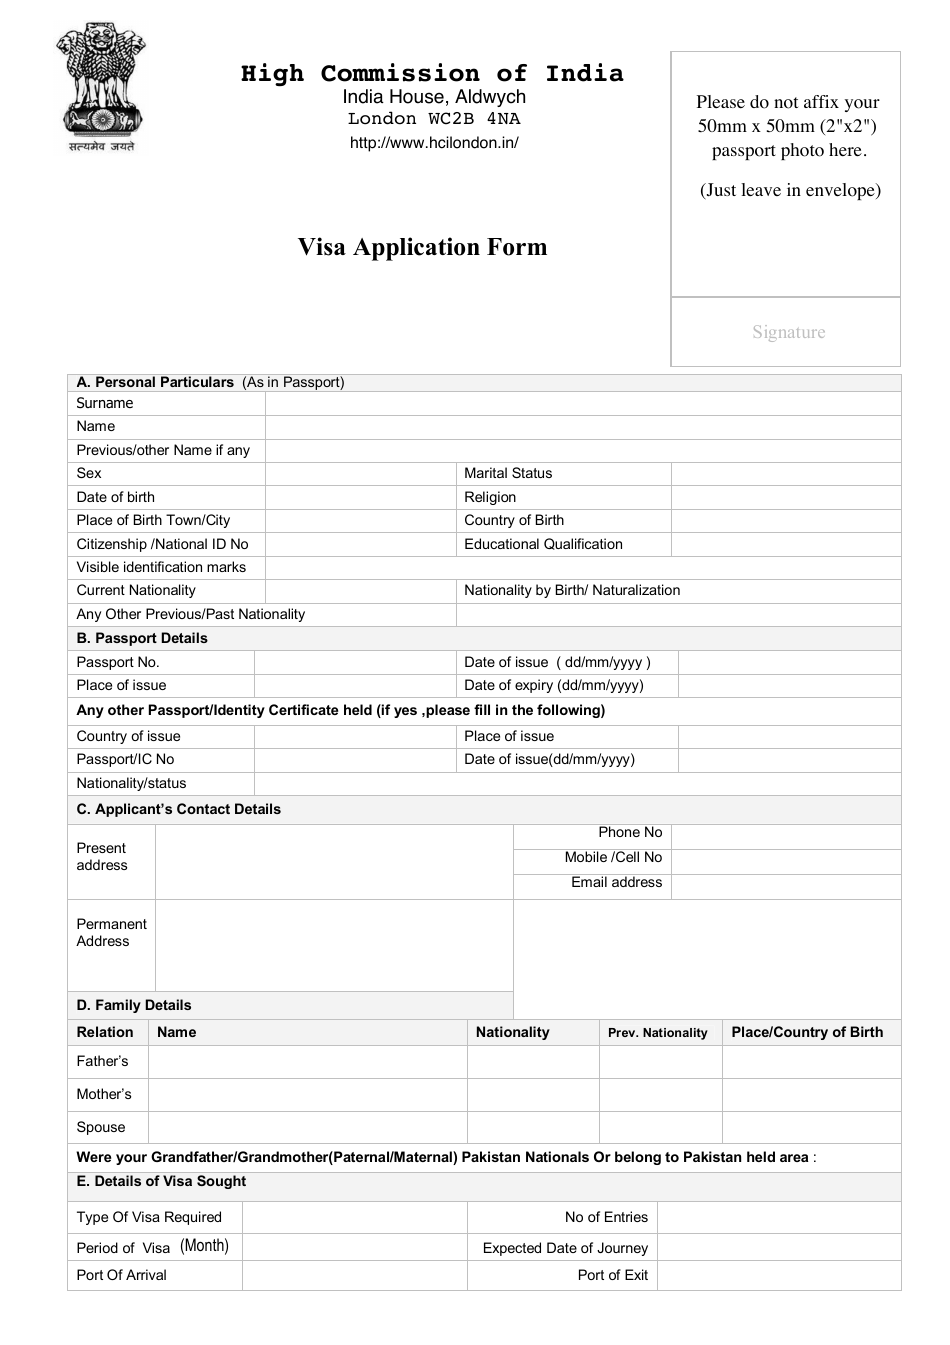 fajta-alv-s-gyermekek-indian-visa-application-form-print-out